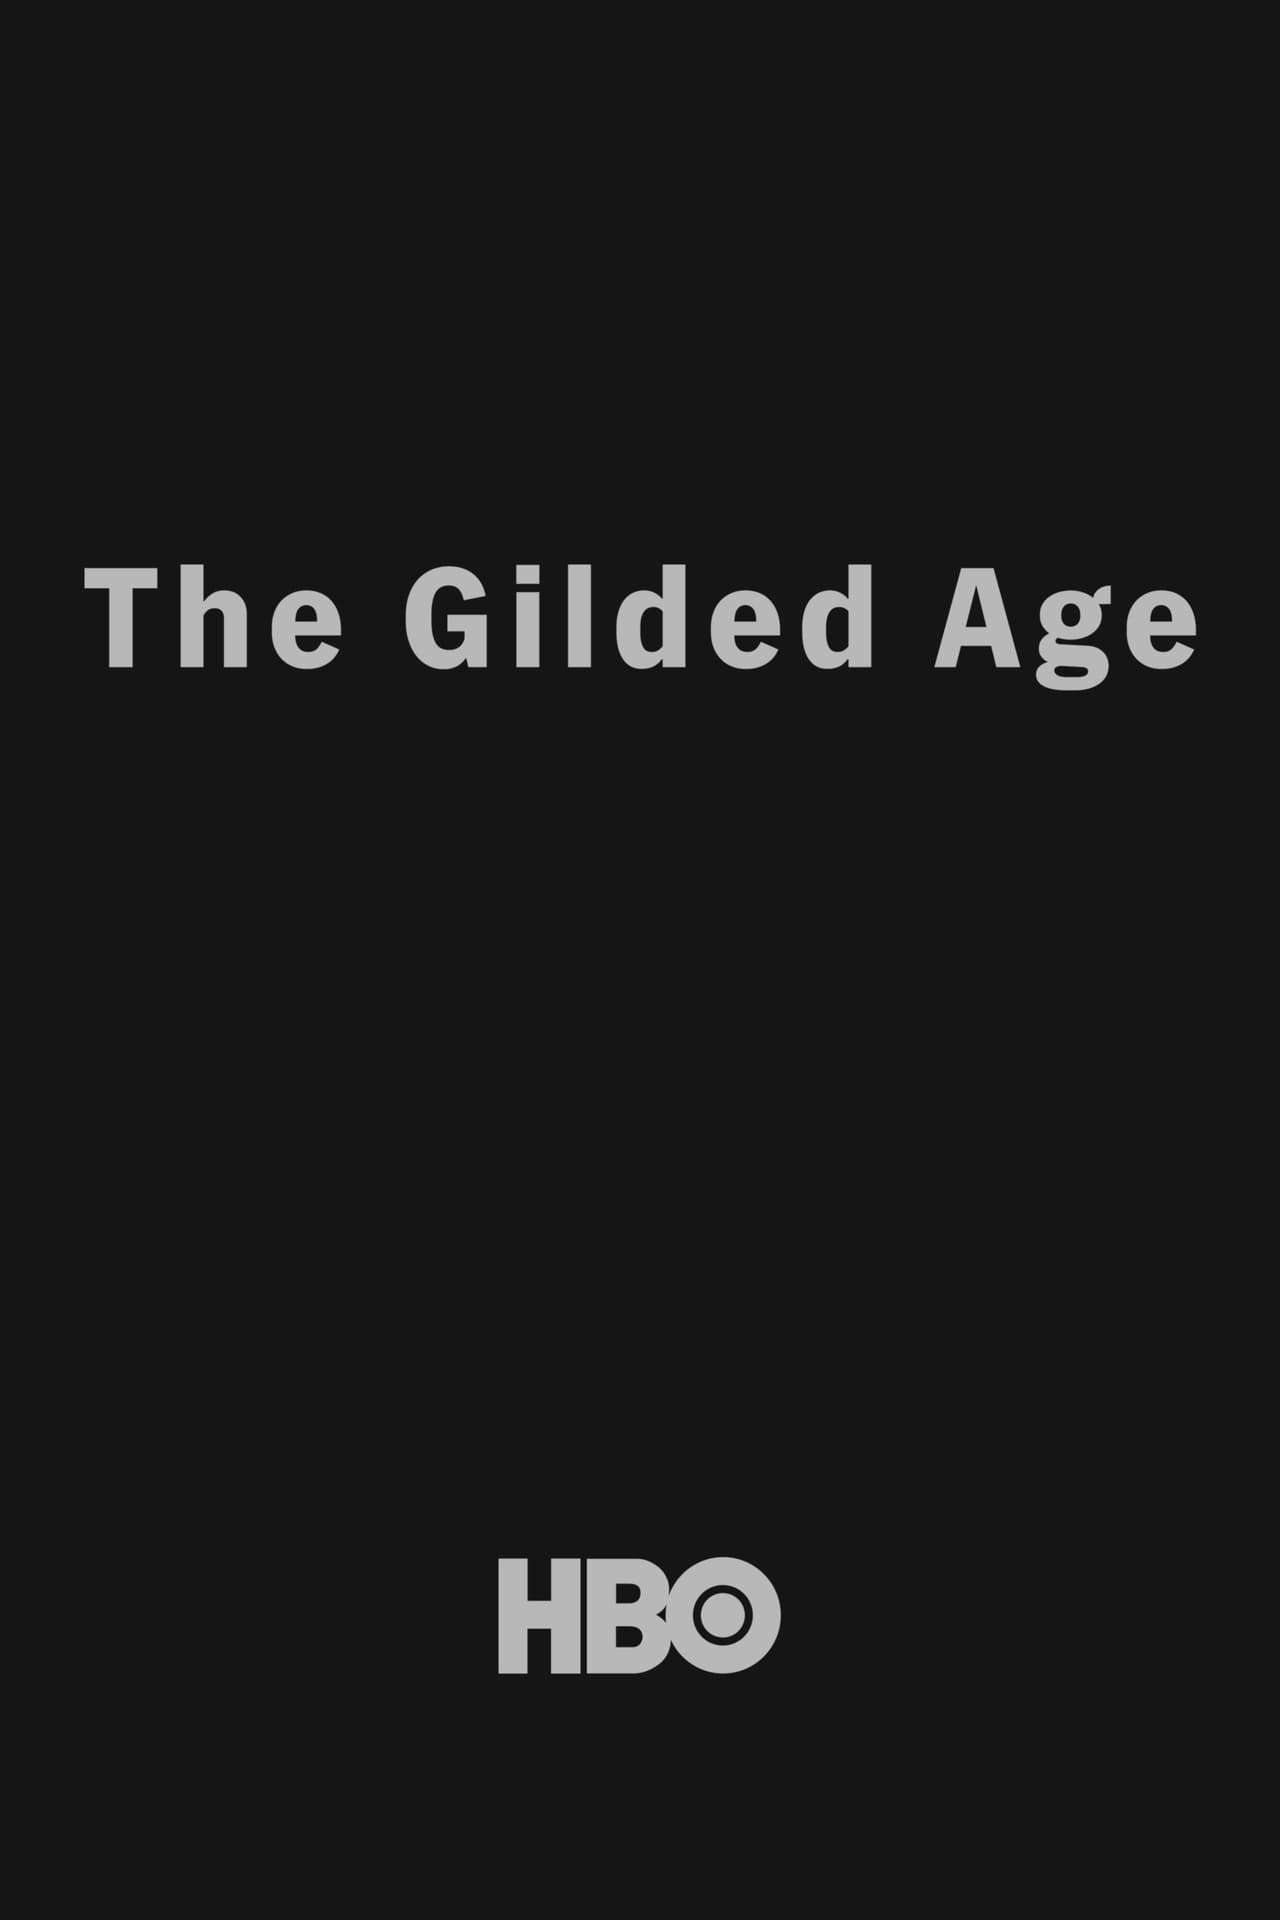 The Gilded Age (season 1)